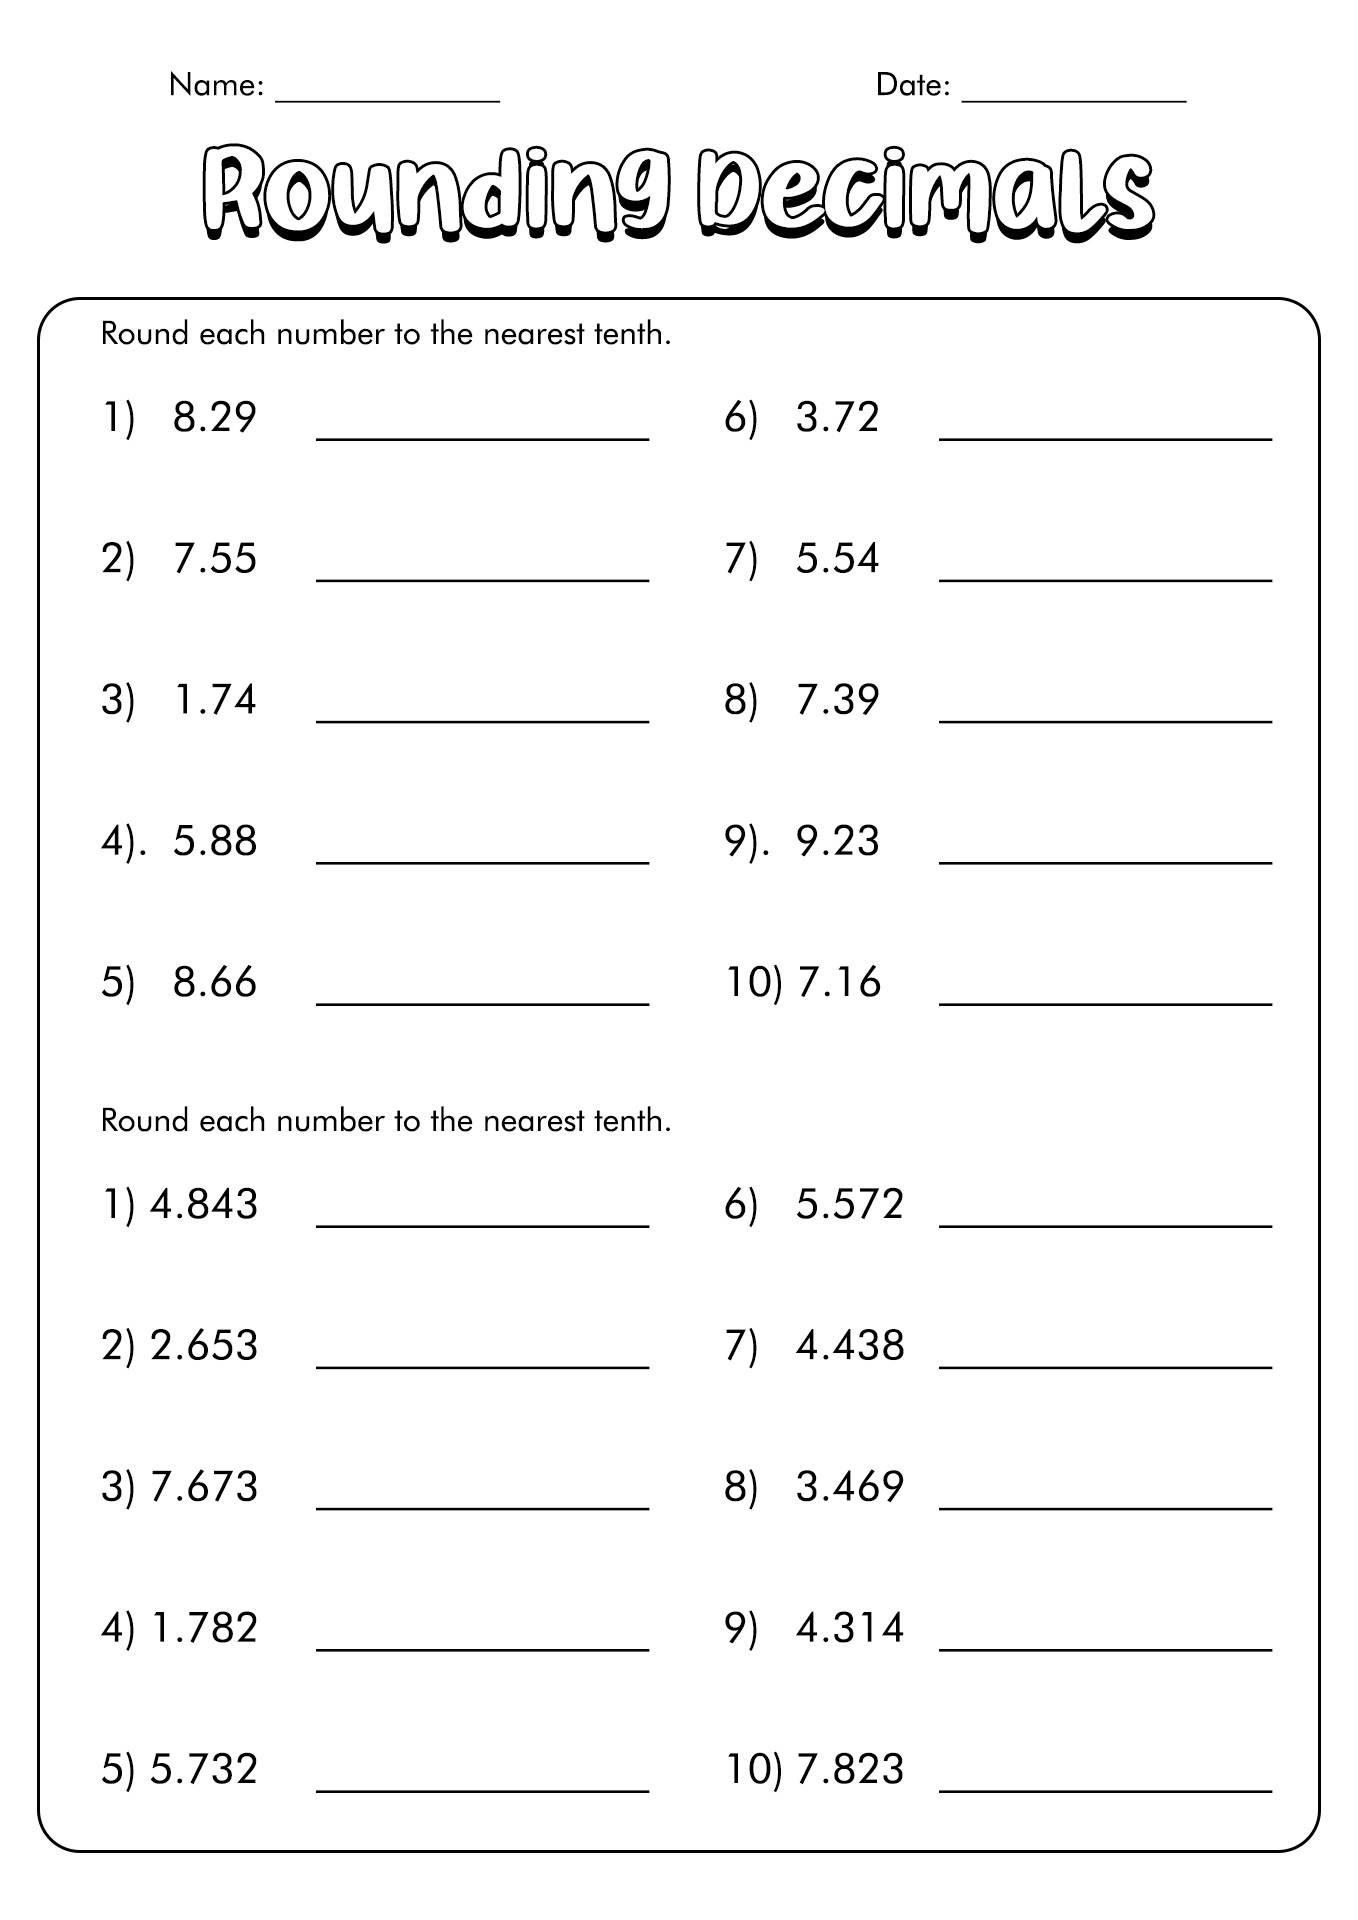 Rounding Decimals Using Benchmark Numbers Worksheet